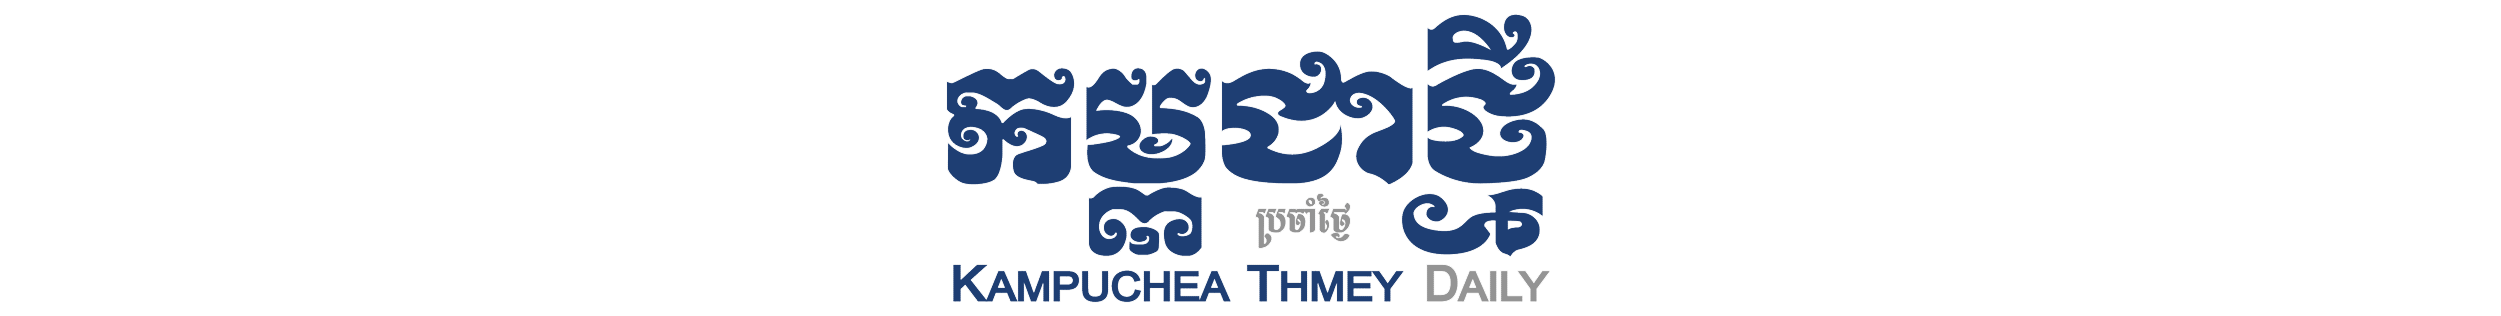 Kampuchea Thmey Daily